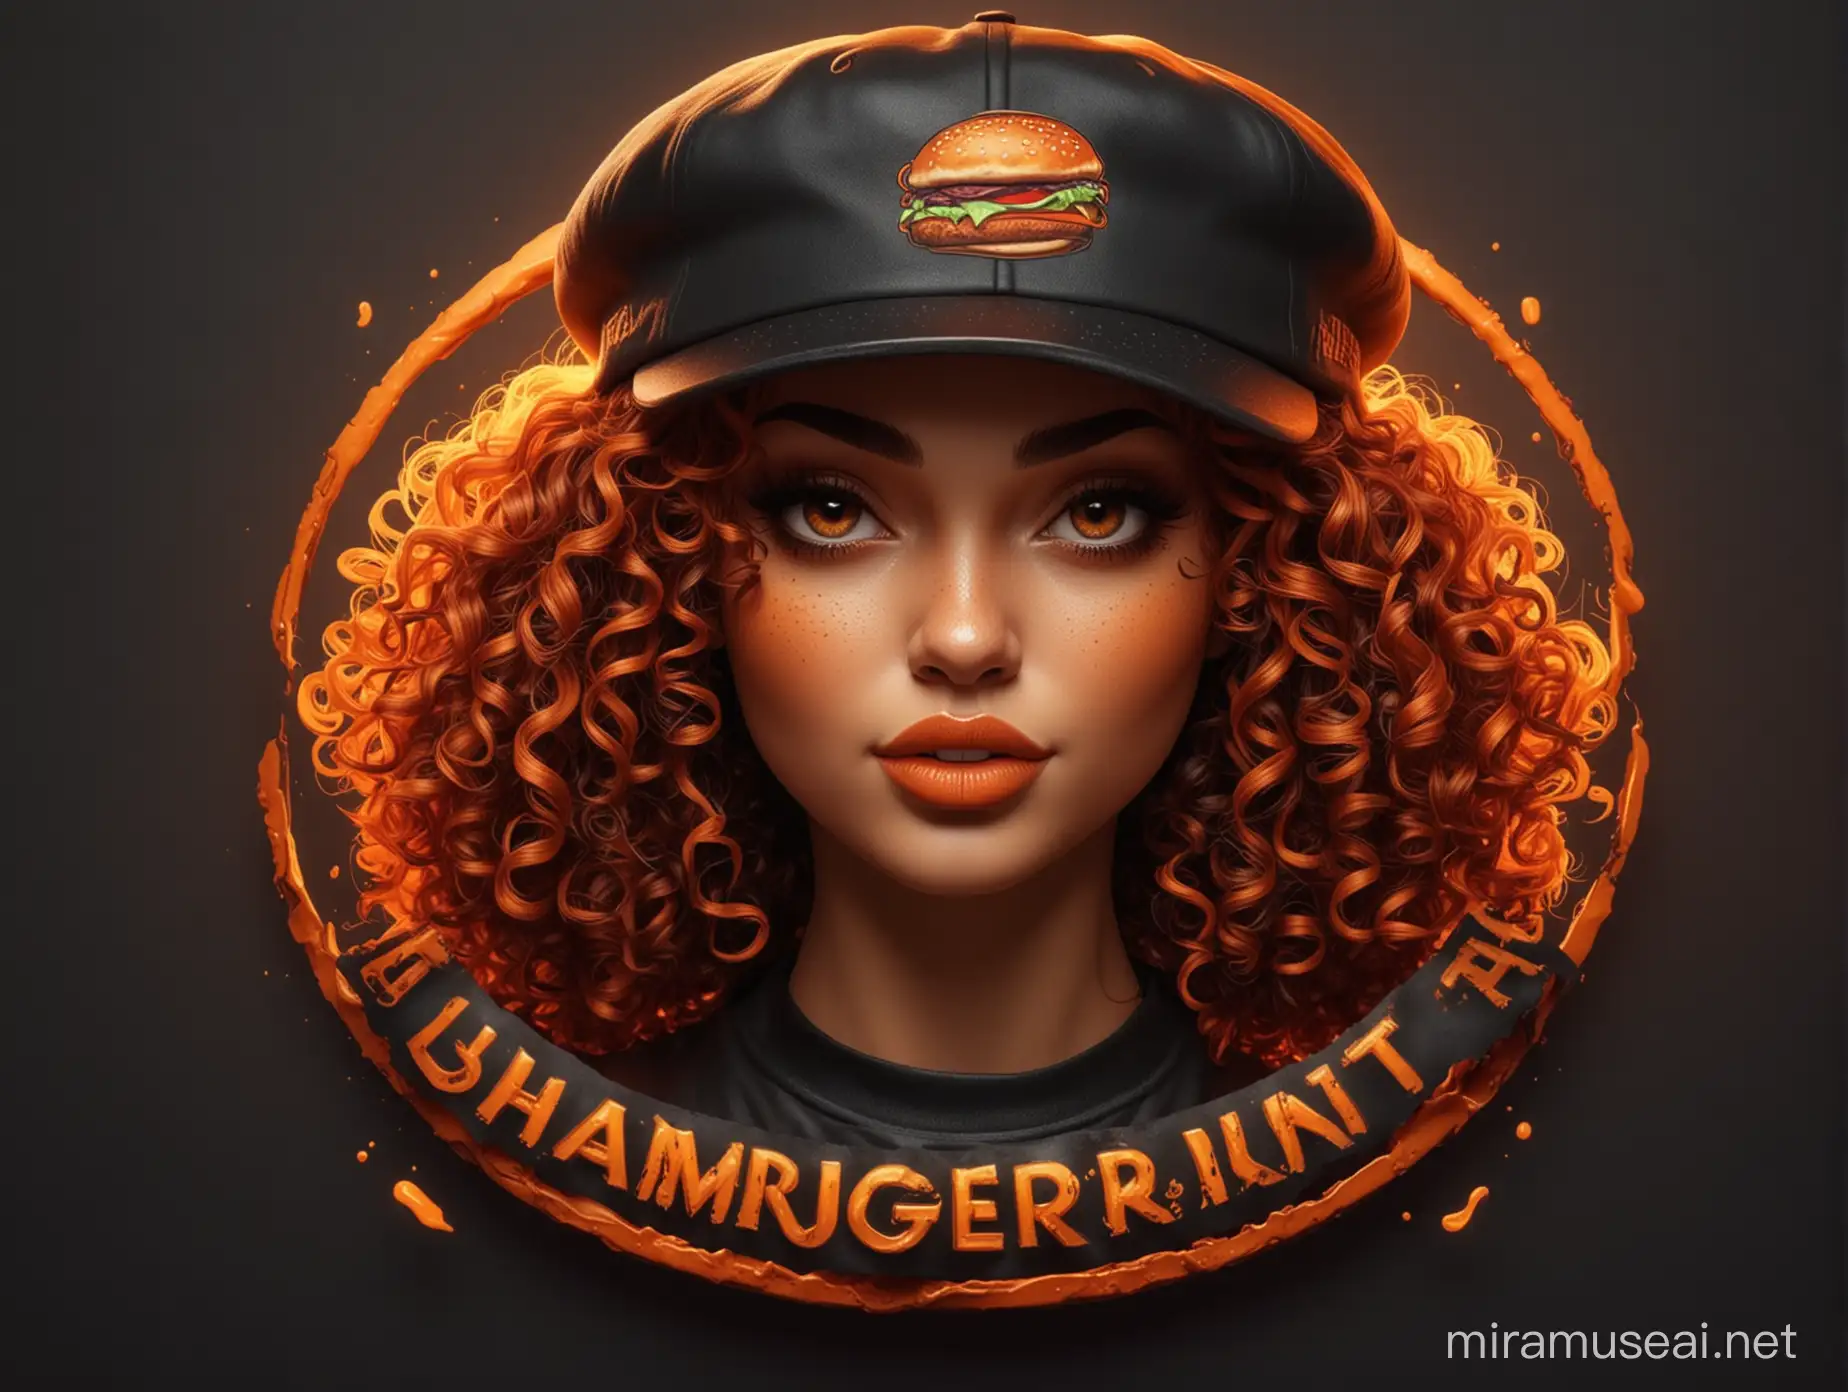 Fiery Orange Hamburger Joint Logo Featuring Dangerous DarkHaired Woman in Black Cap